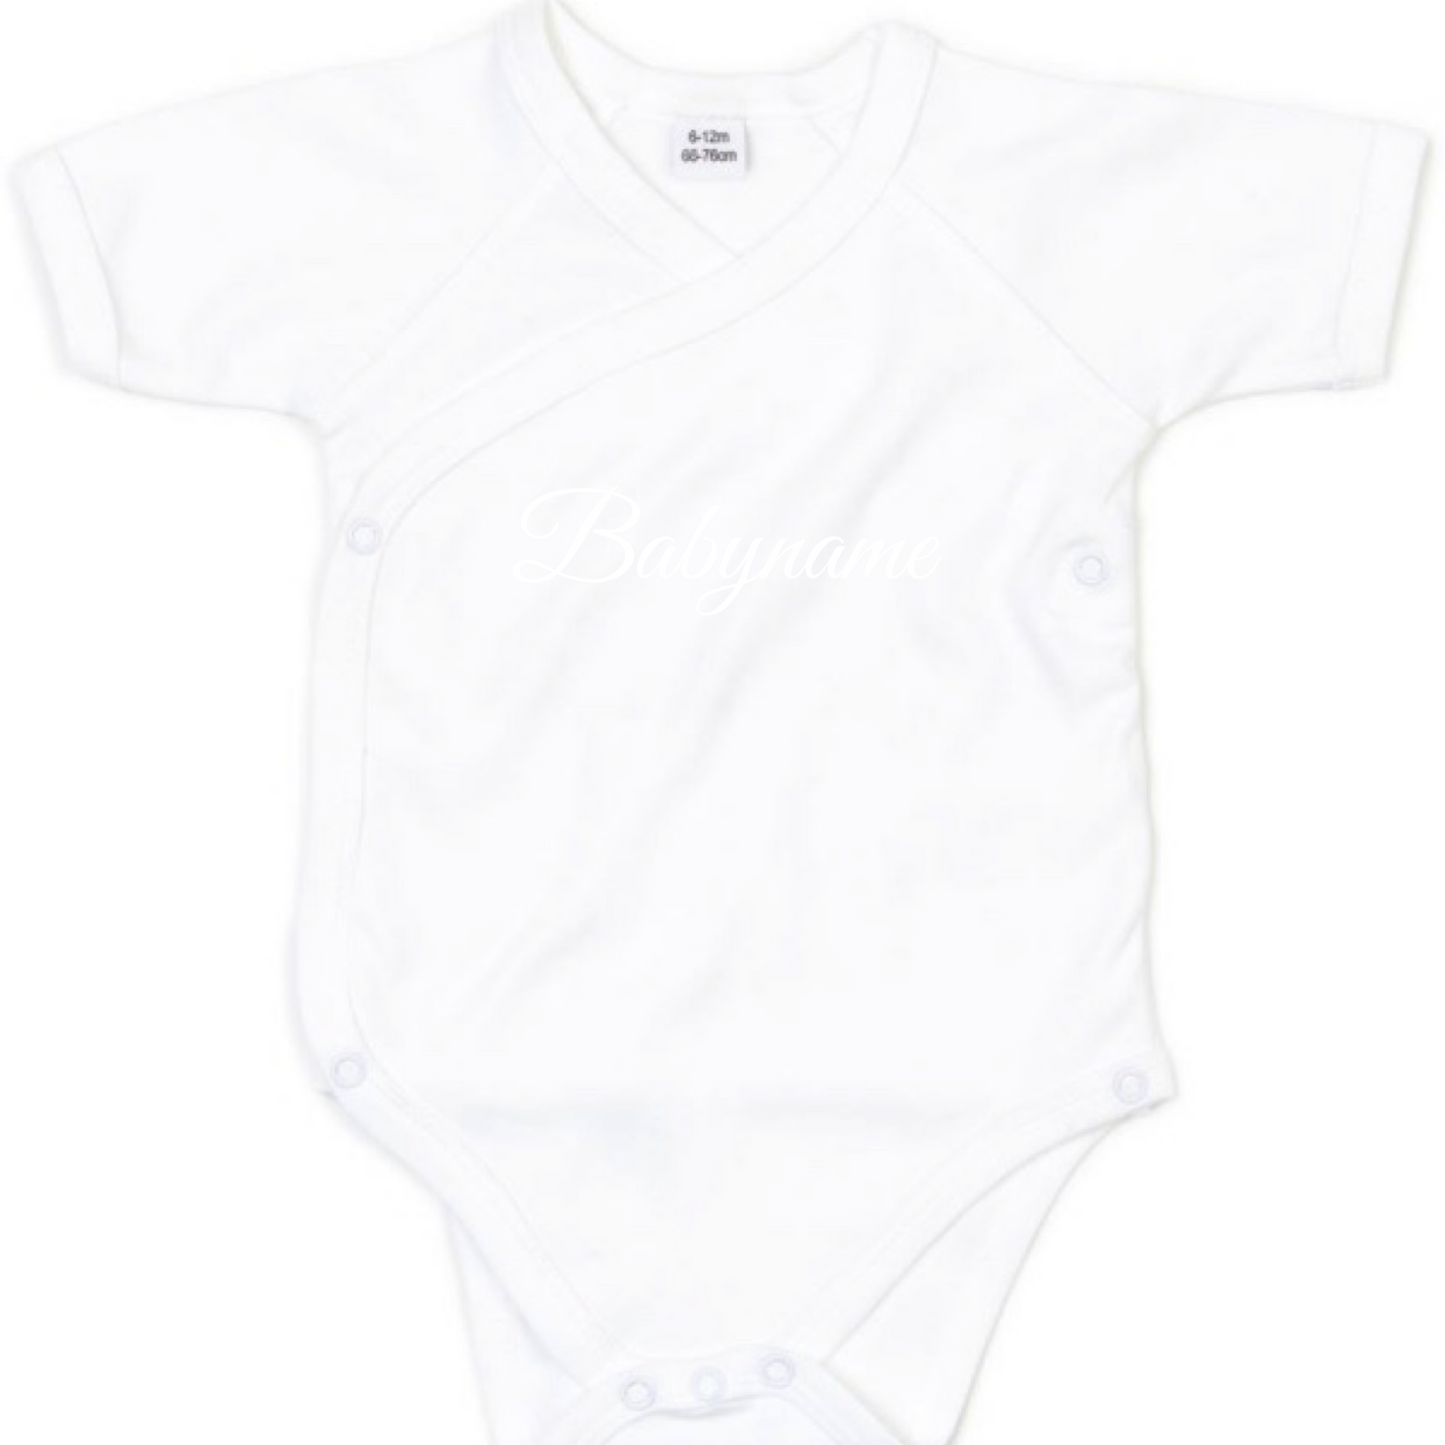 Personalized Baby Bodysuit